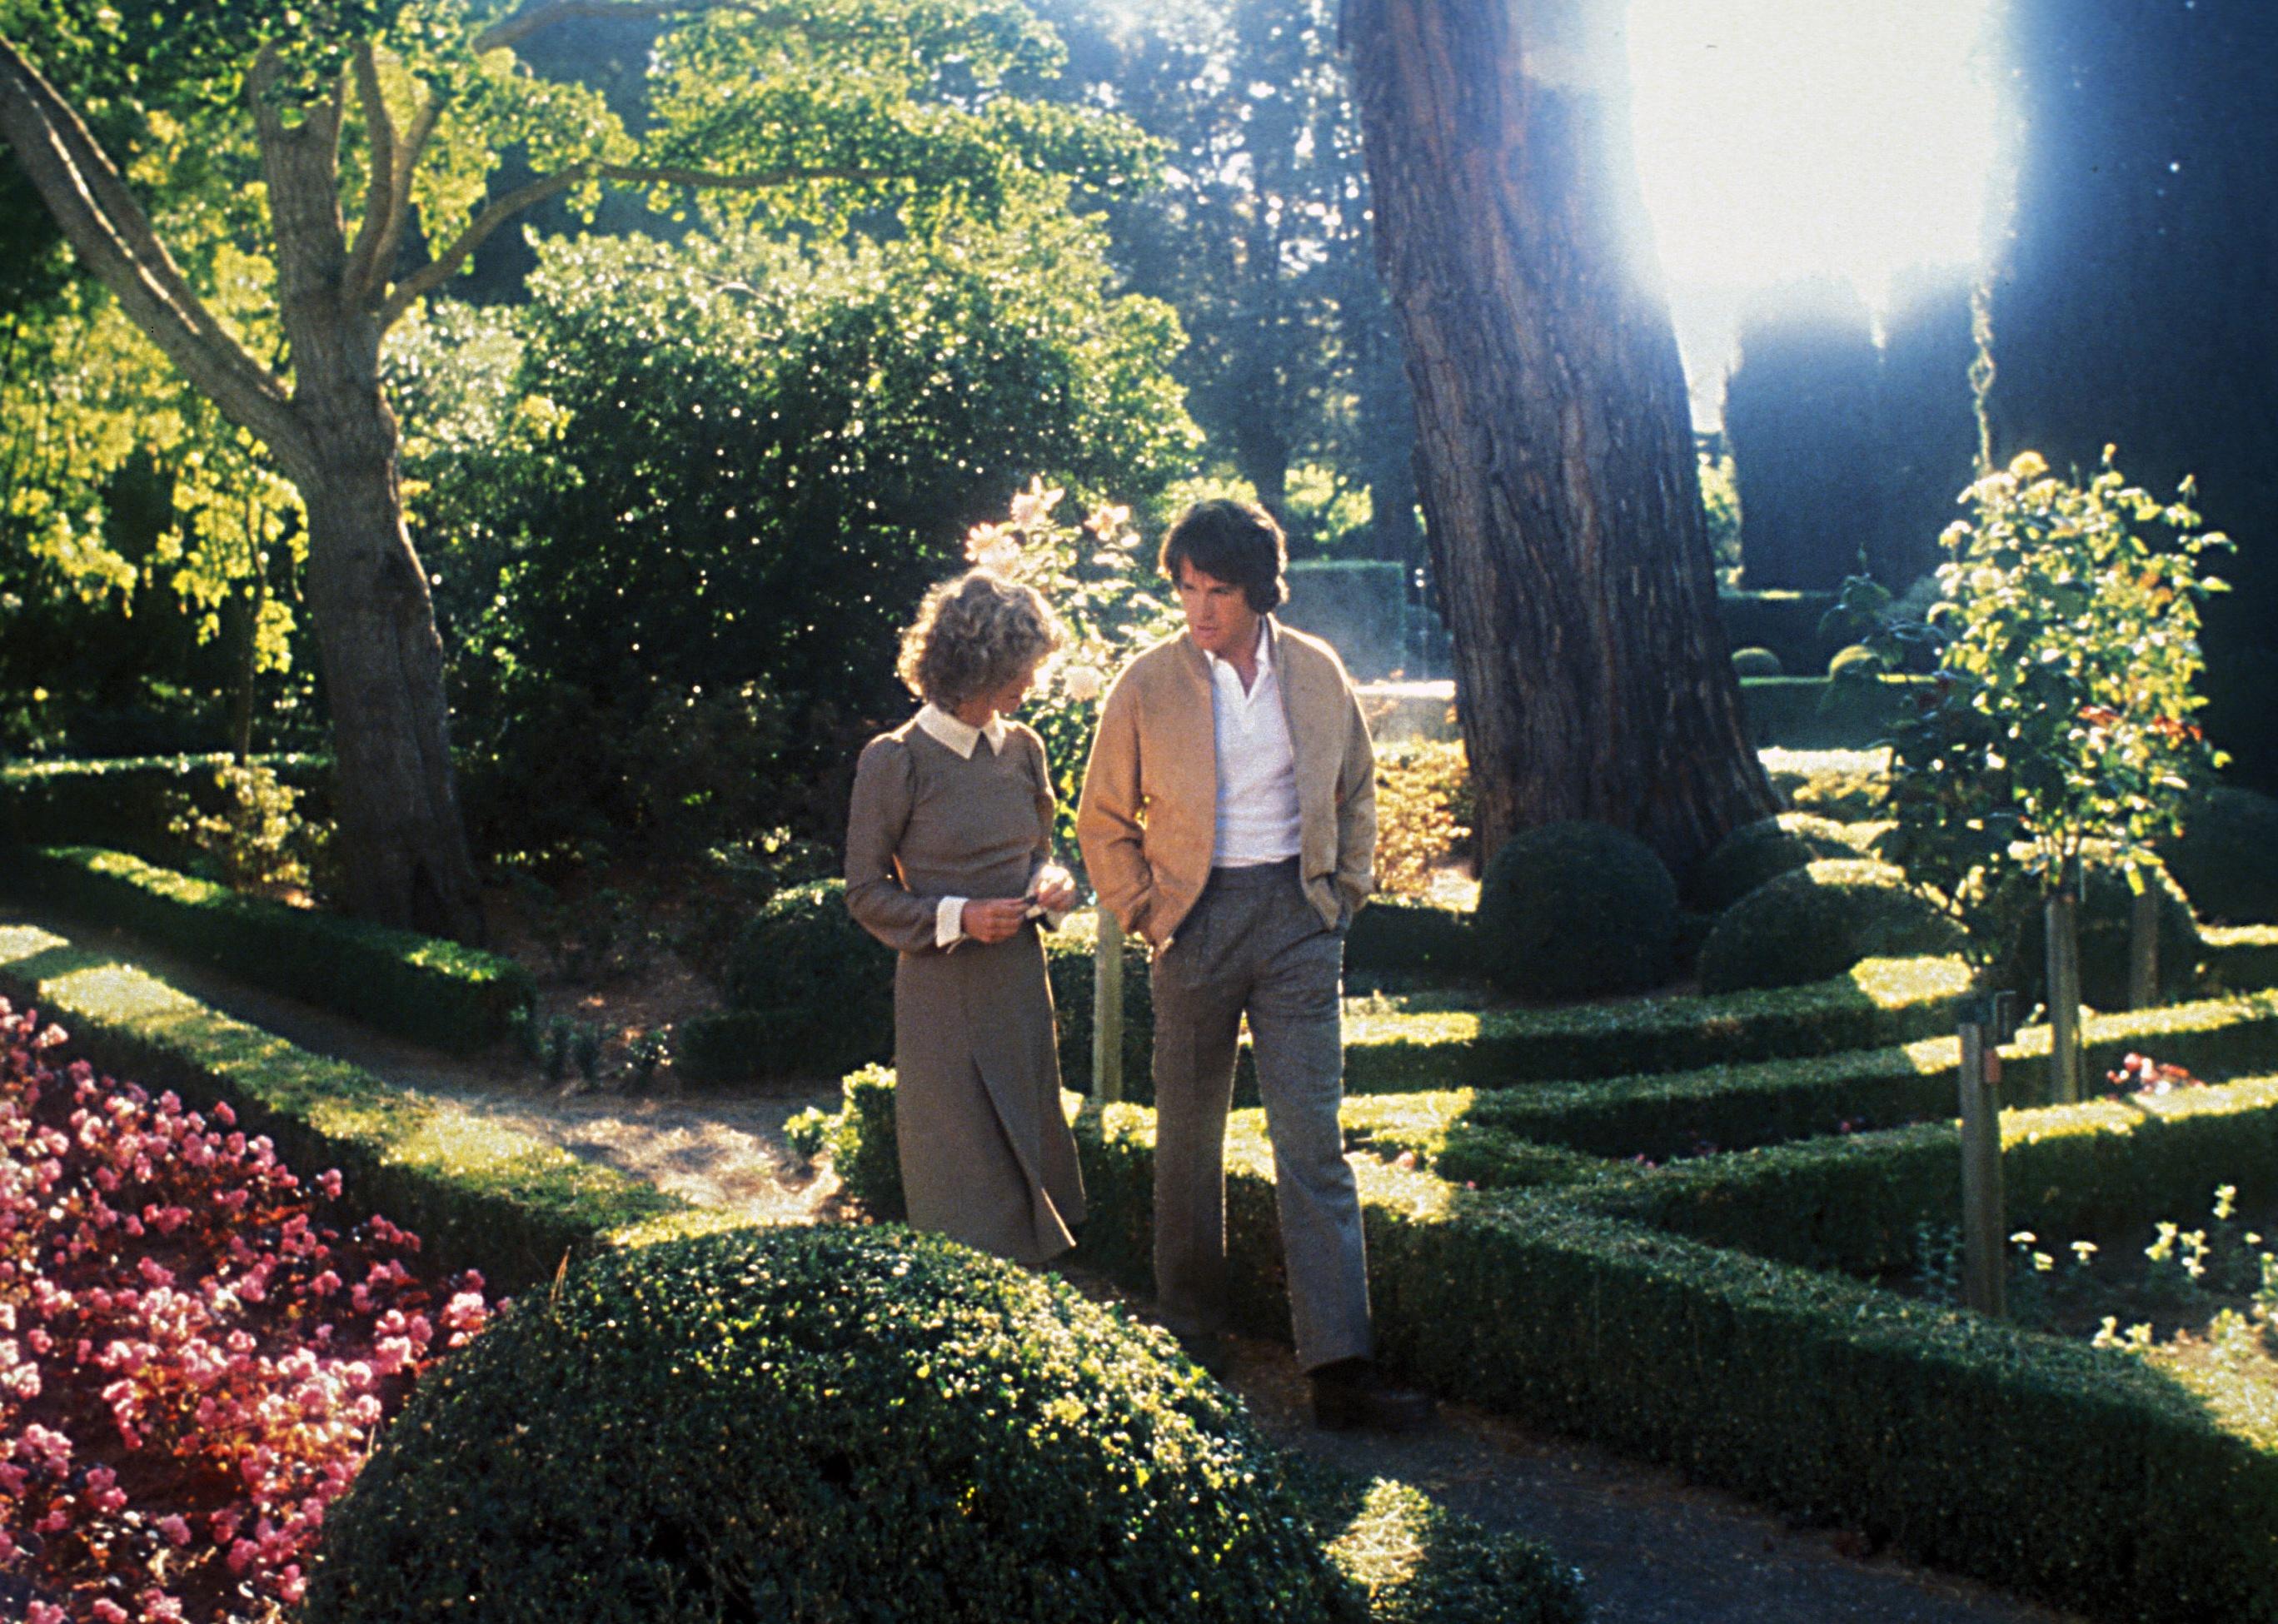 Warren Beatty and Julie Christie walk together in a beautiful garden.